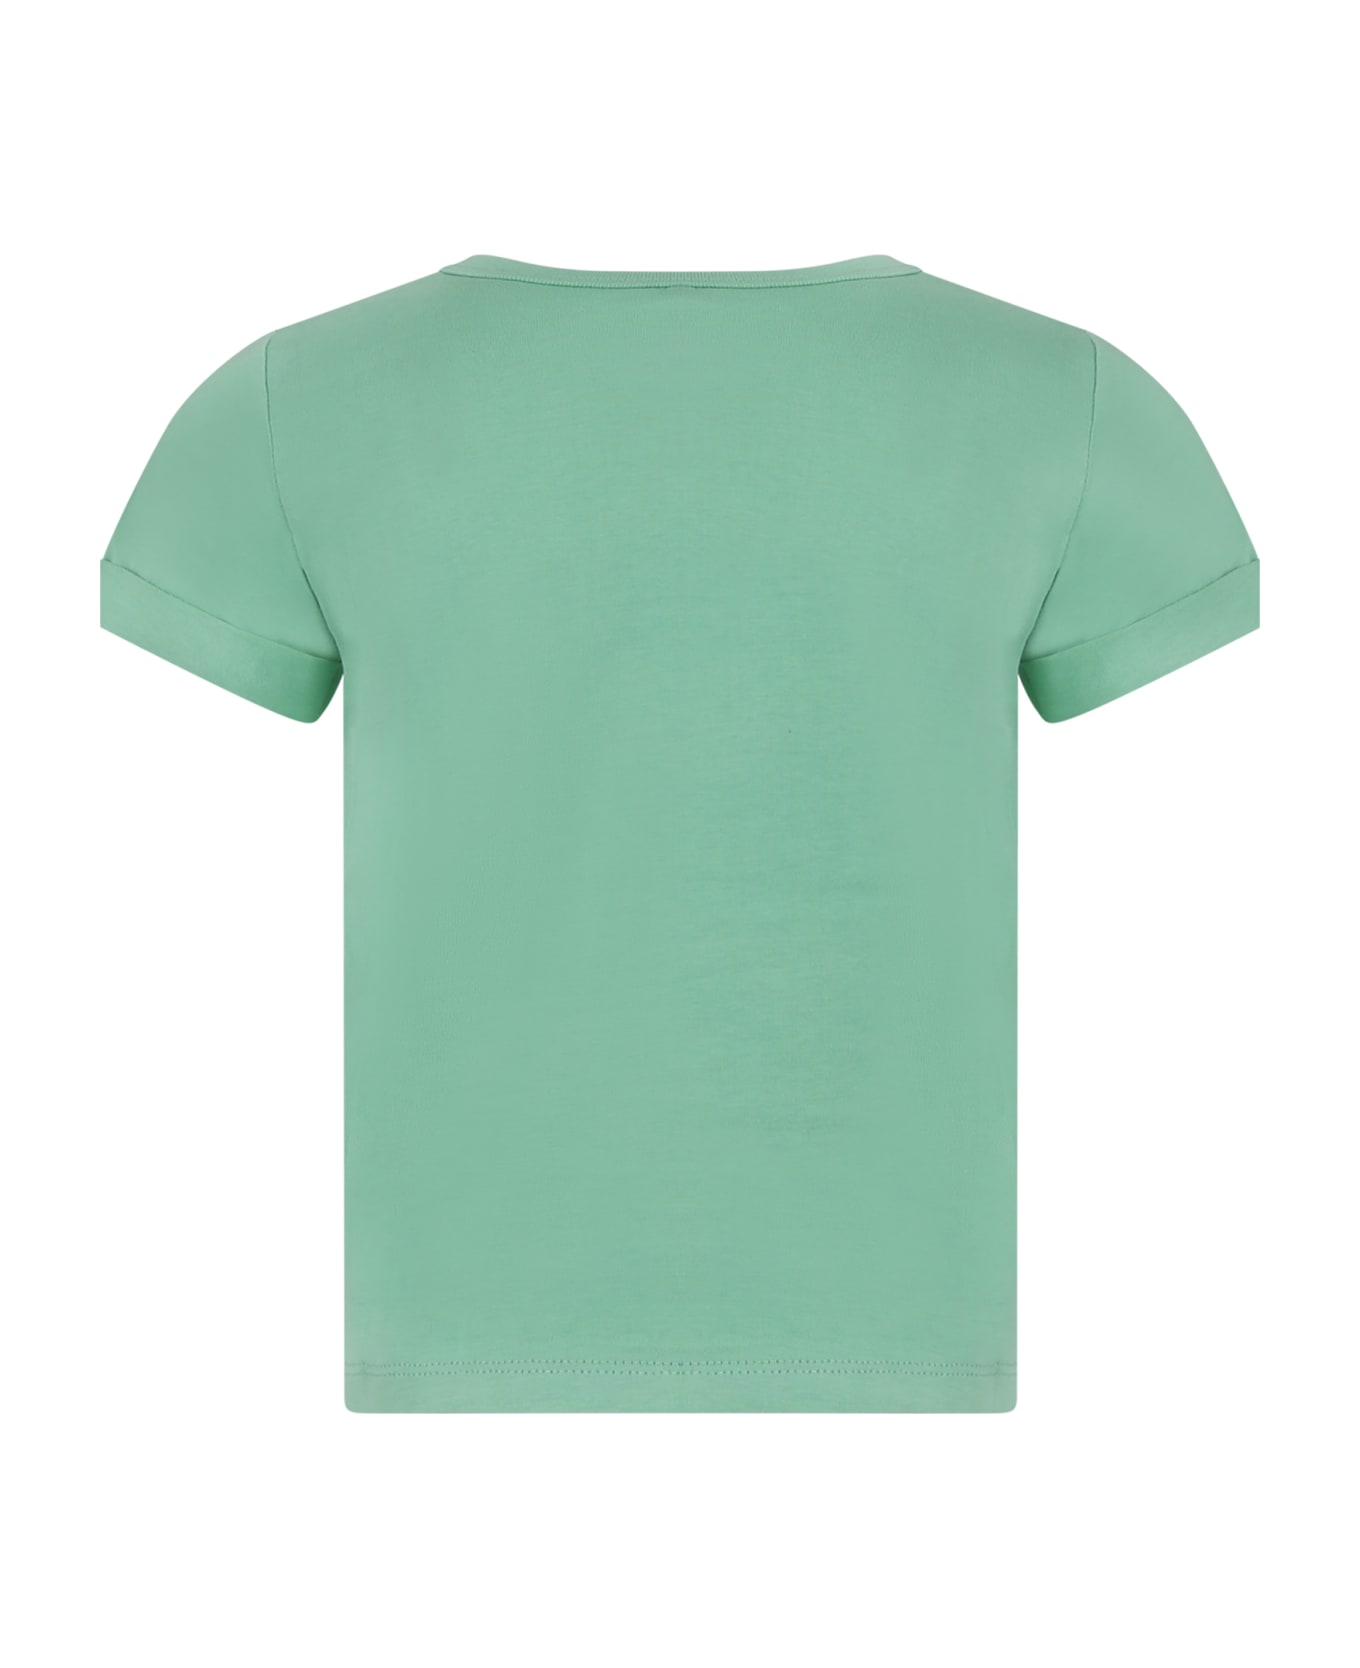 Stella McCartney Kids Green T-shirt For Girl With Star - Green